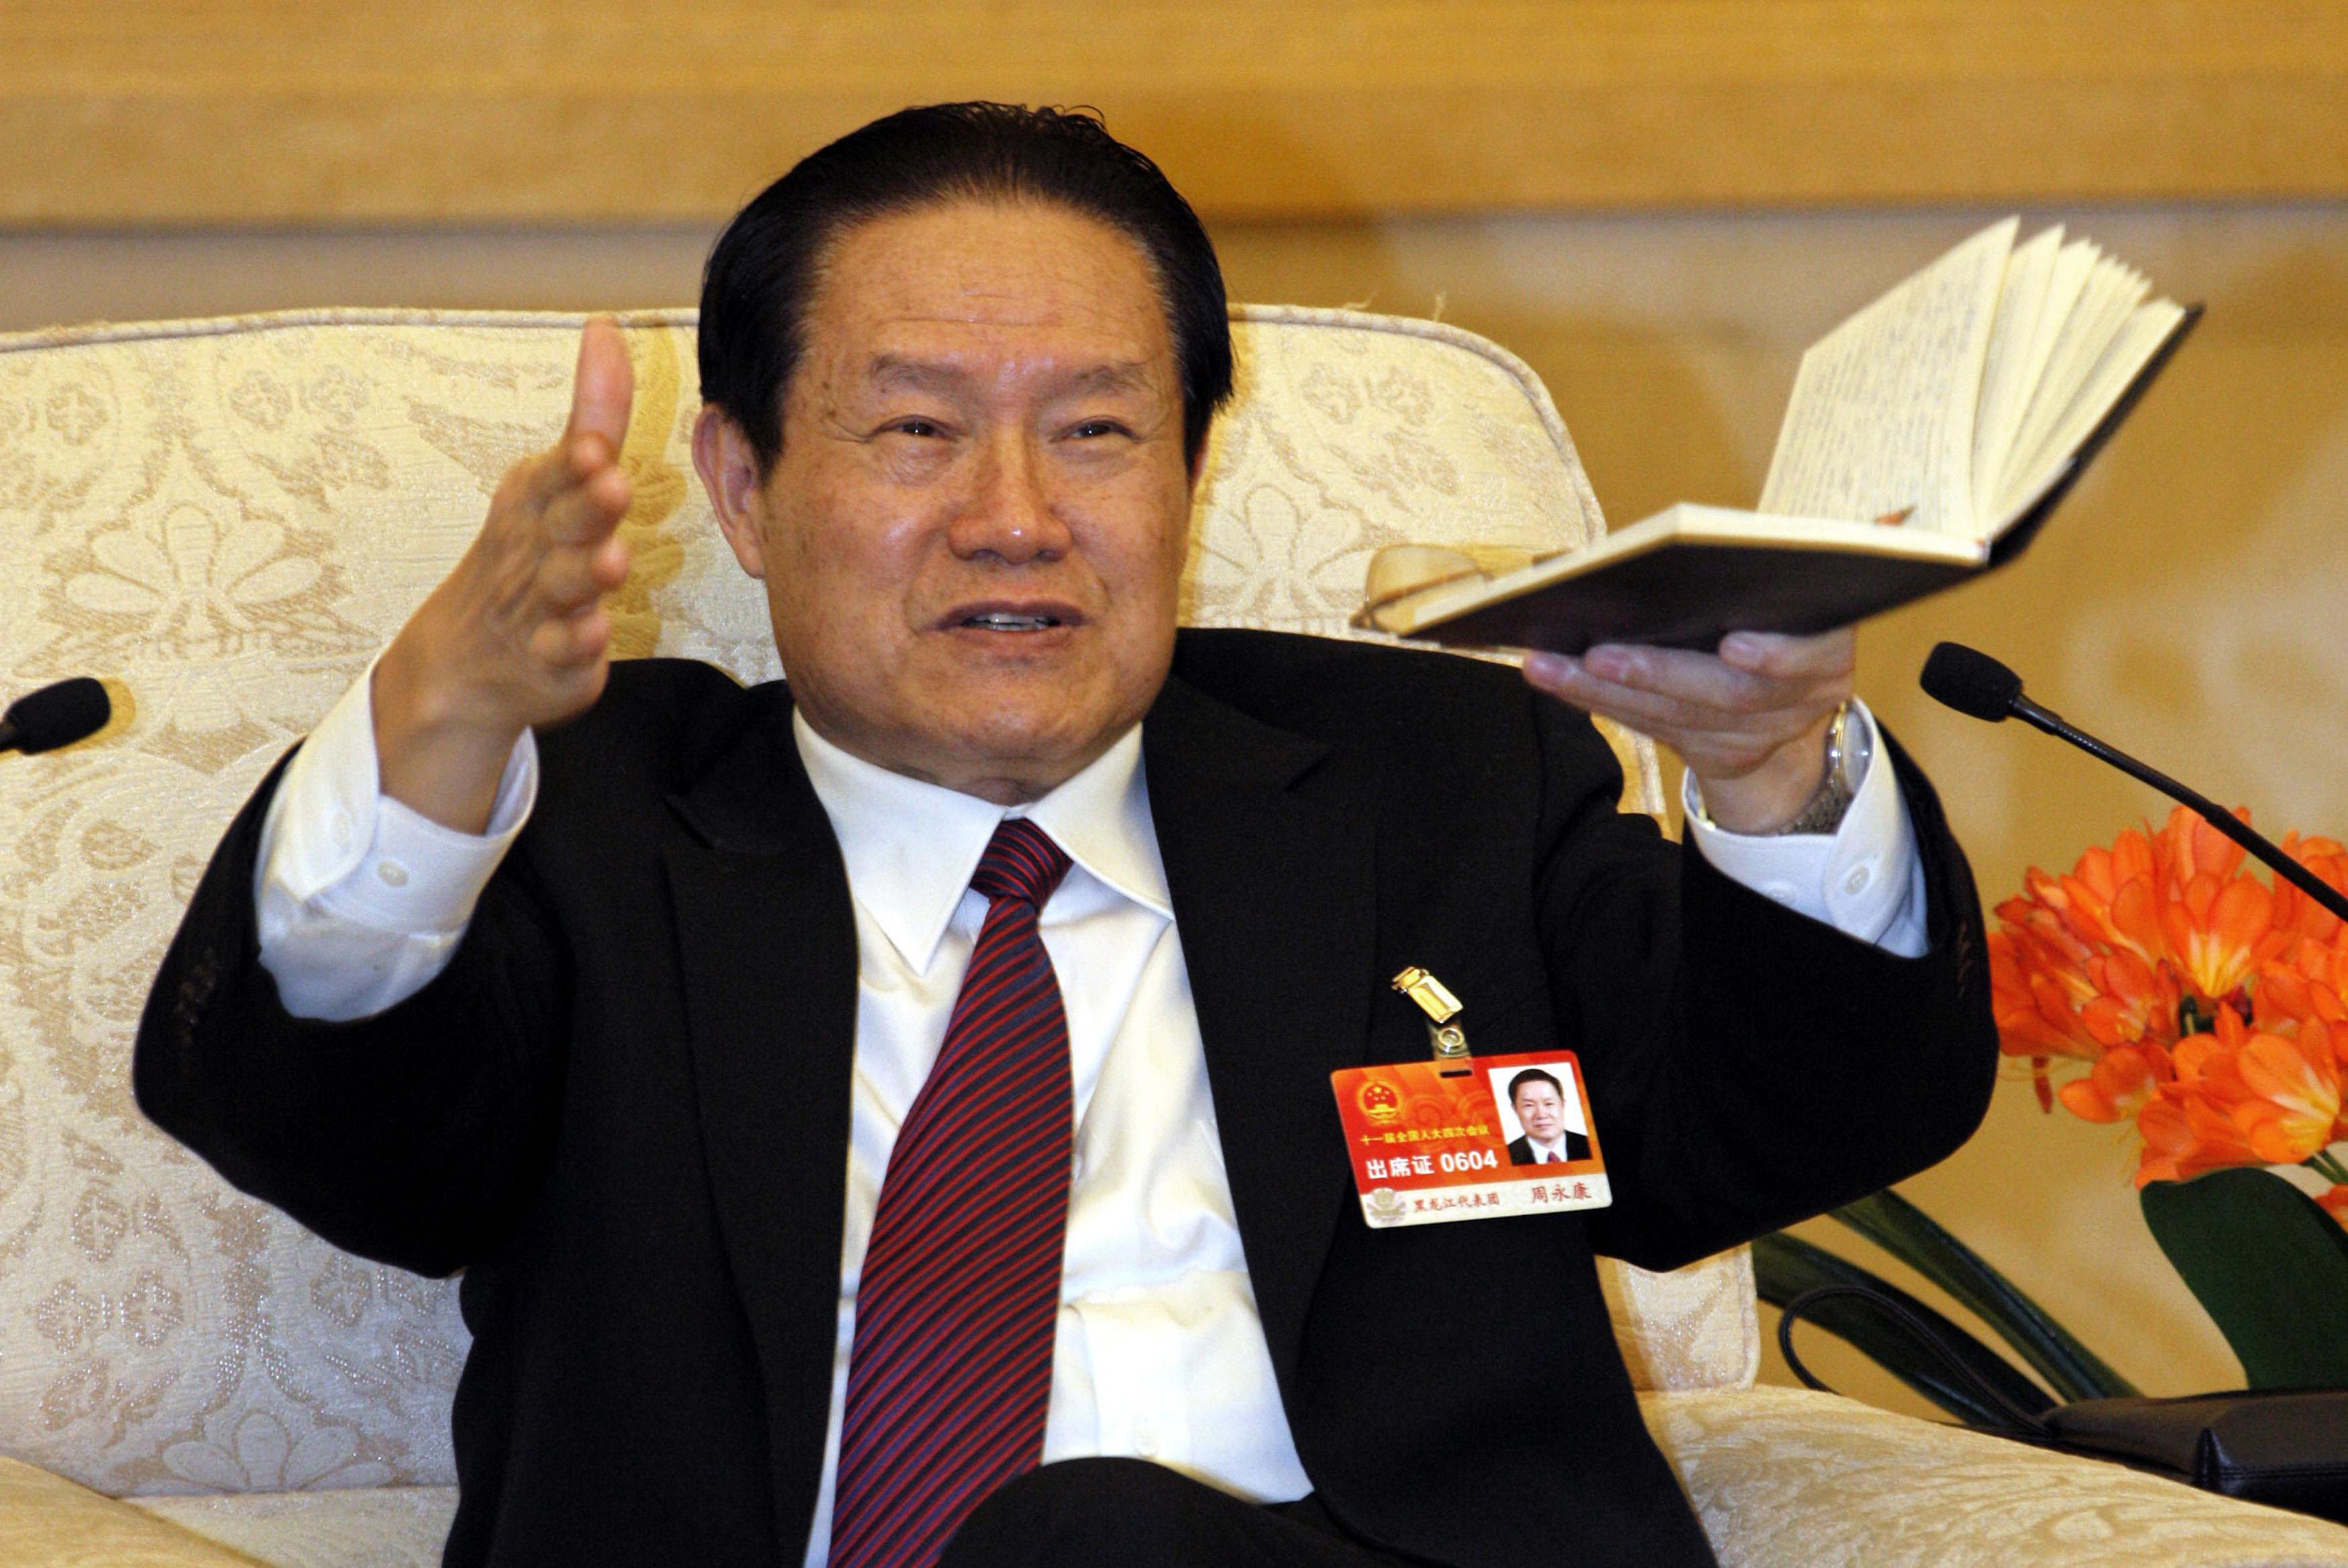 Former China Politburo member faces corruption probe: report